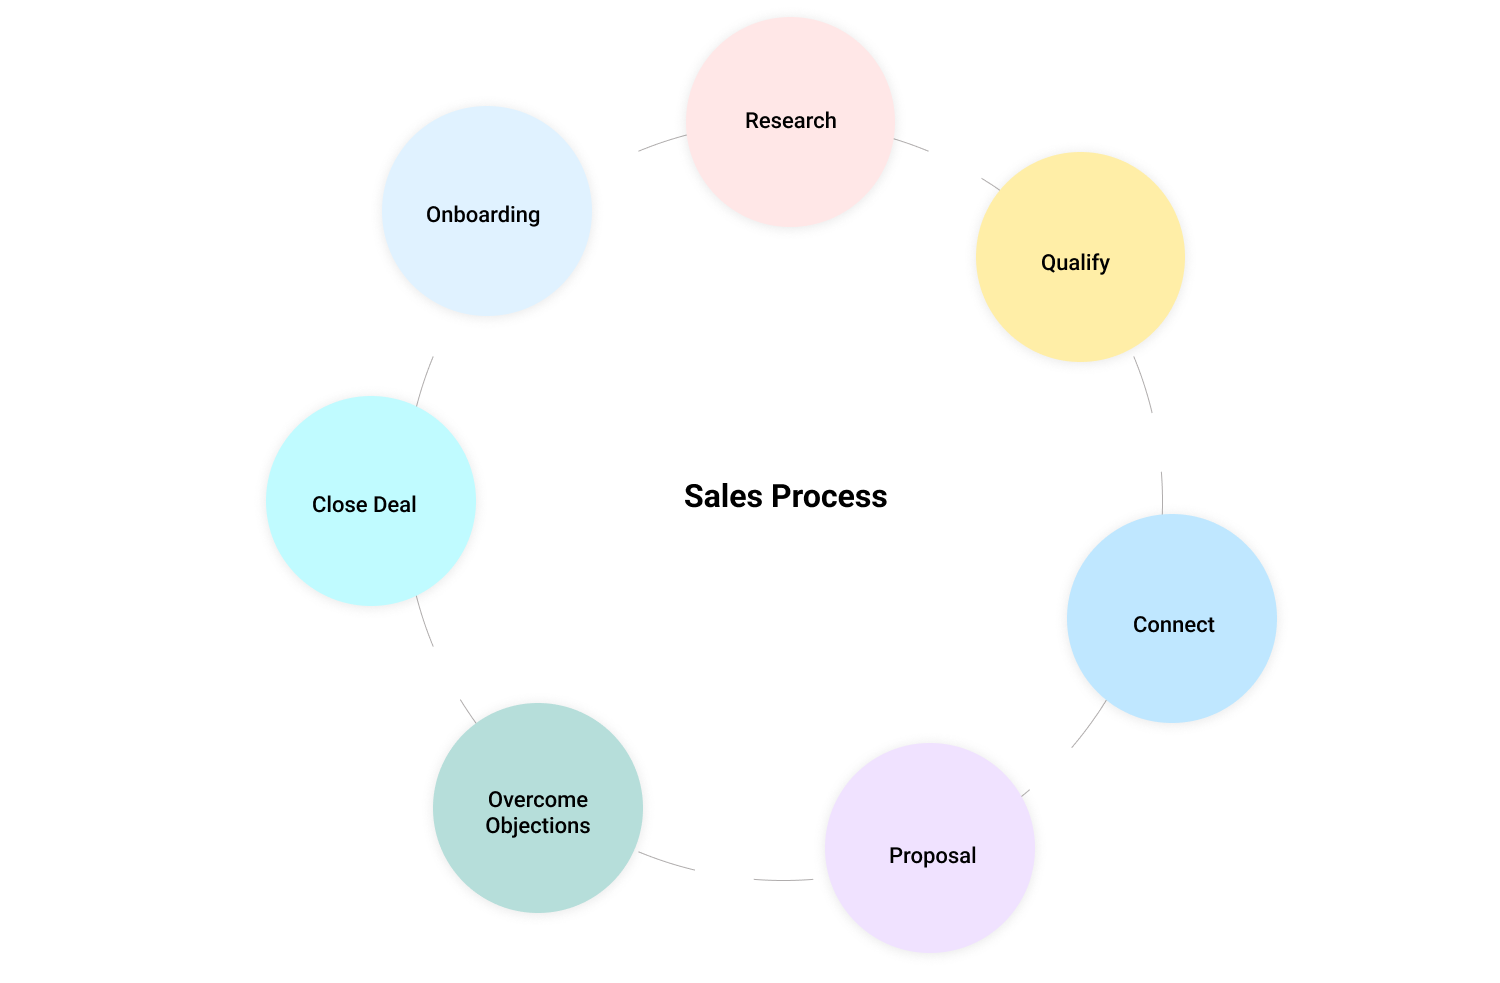 Sales Process Flowchart